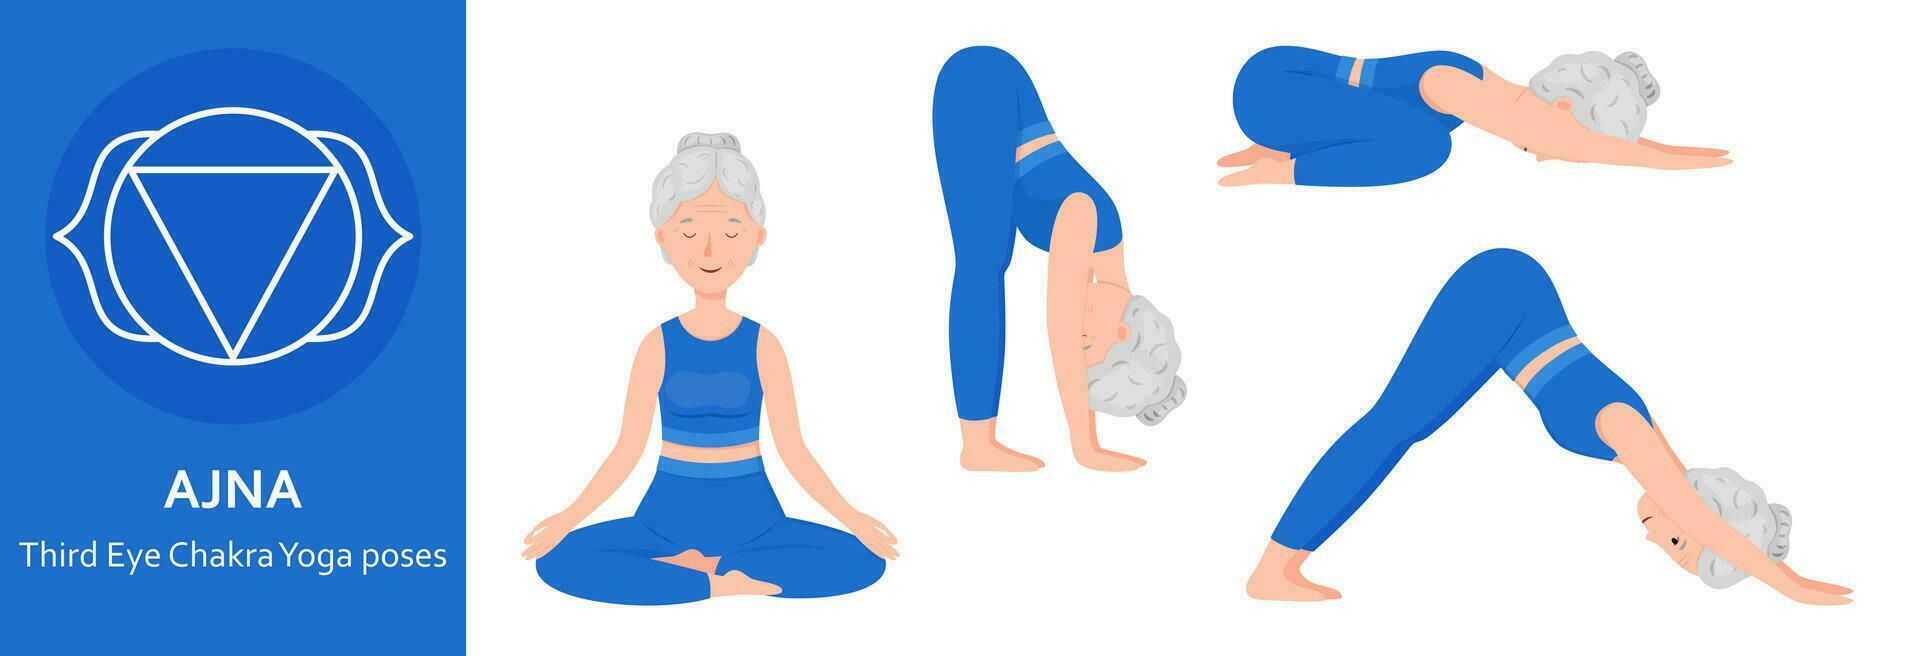 tercero ojo chakra yoga posa mayor mujer practicando ajna chakra yoga asanas sano estilo de vida. plano dibujos animados personaje. vector ilustración